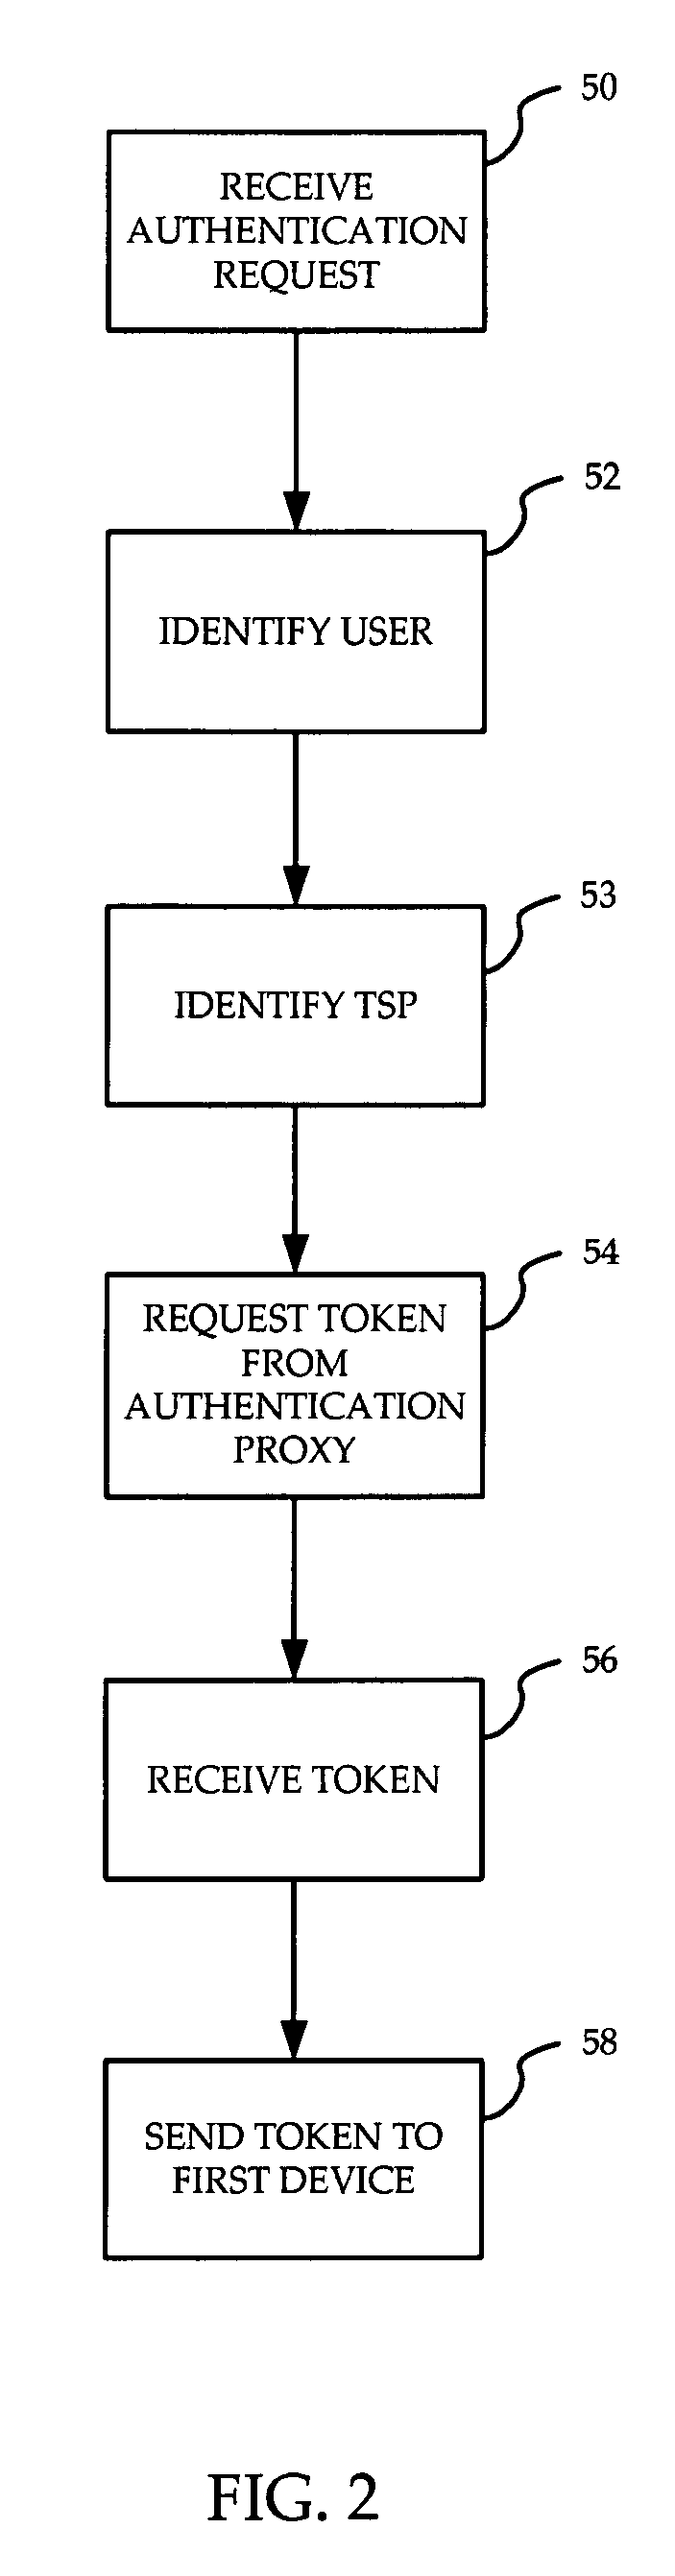 Identity verification for secure e-commerce transactions